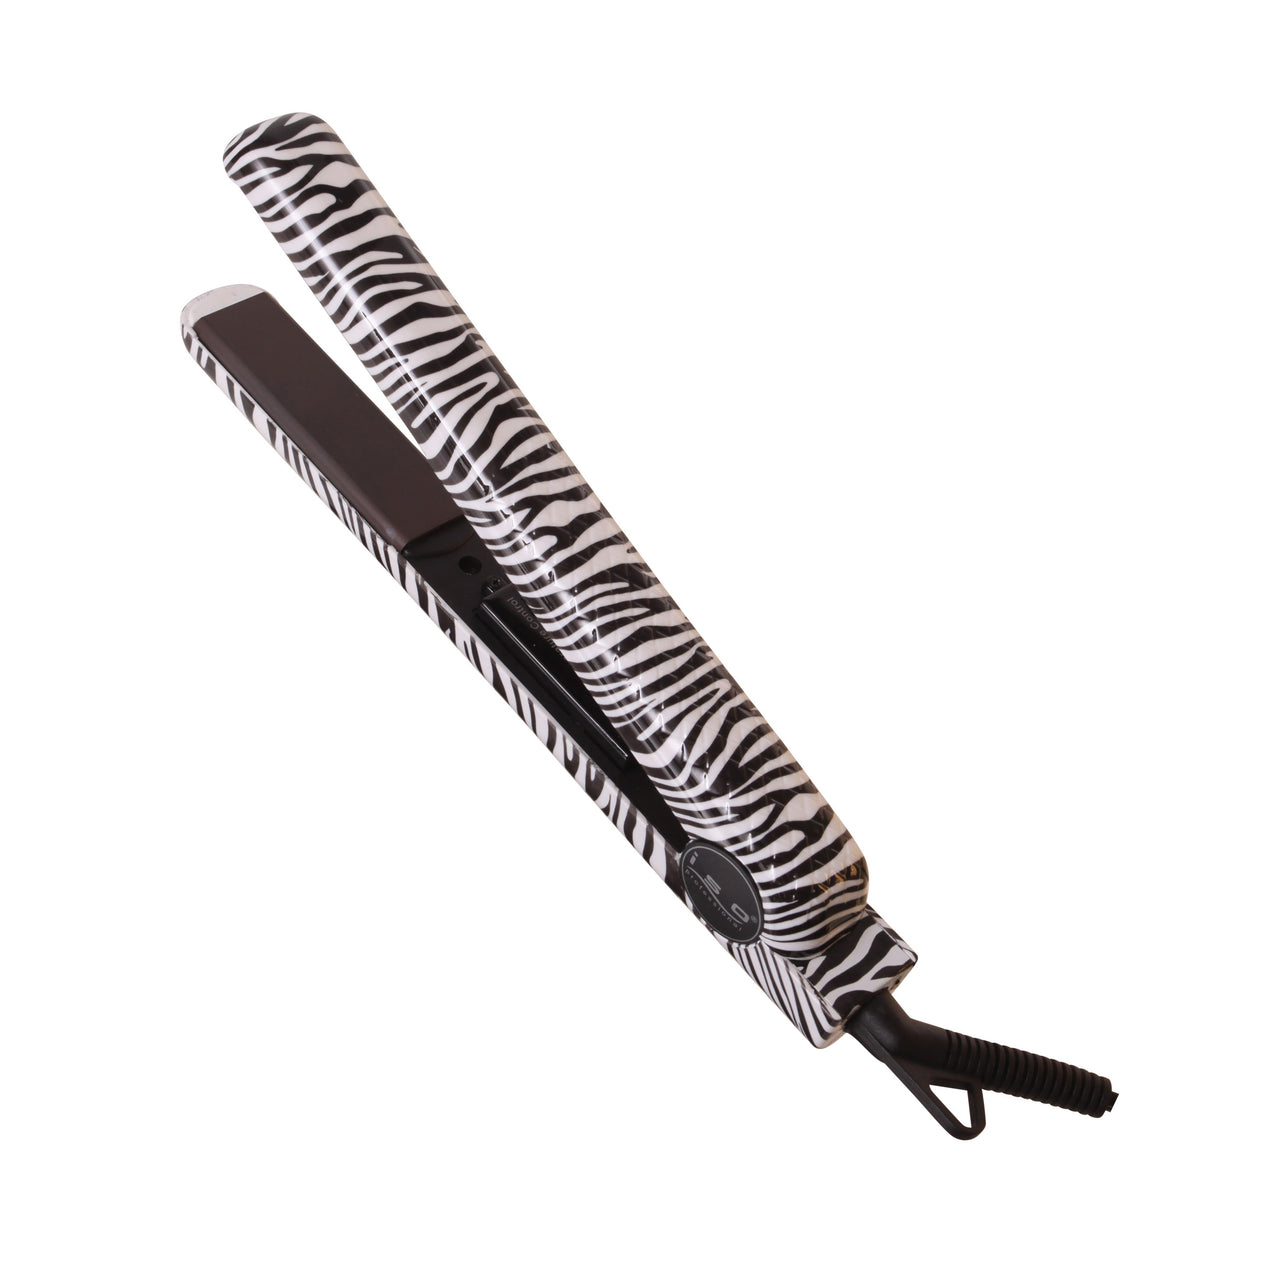 Limited Edition White Zebra 1.25" Ceramic Flat Iron Hair Straightener with Adjustable Temperature